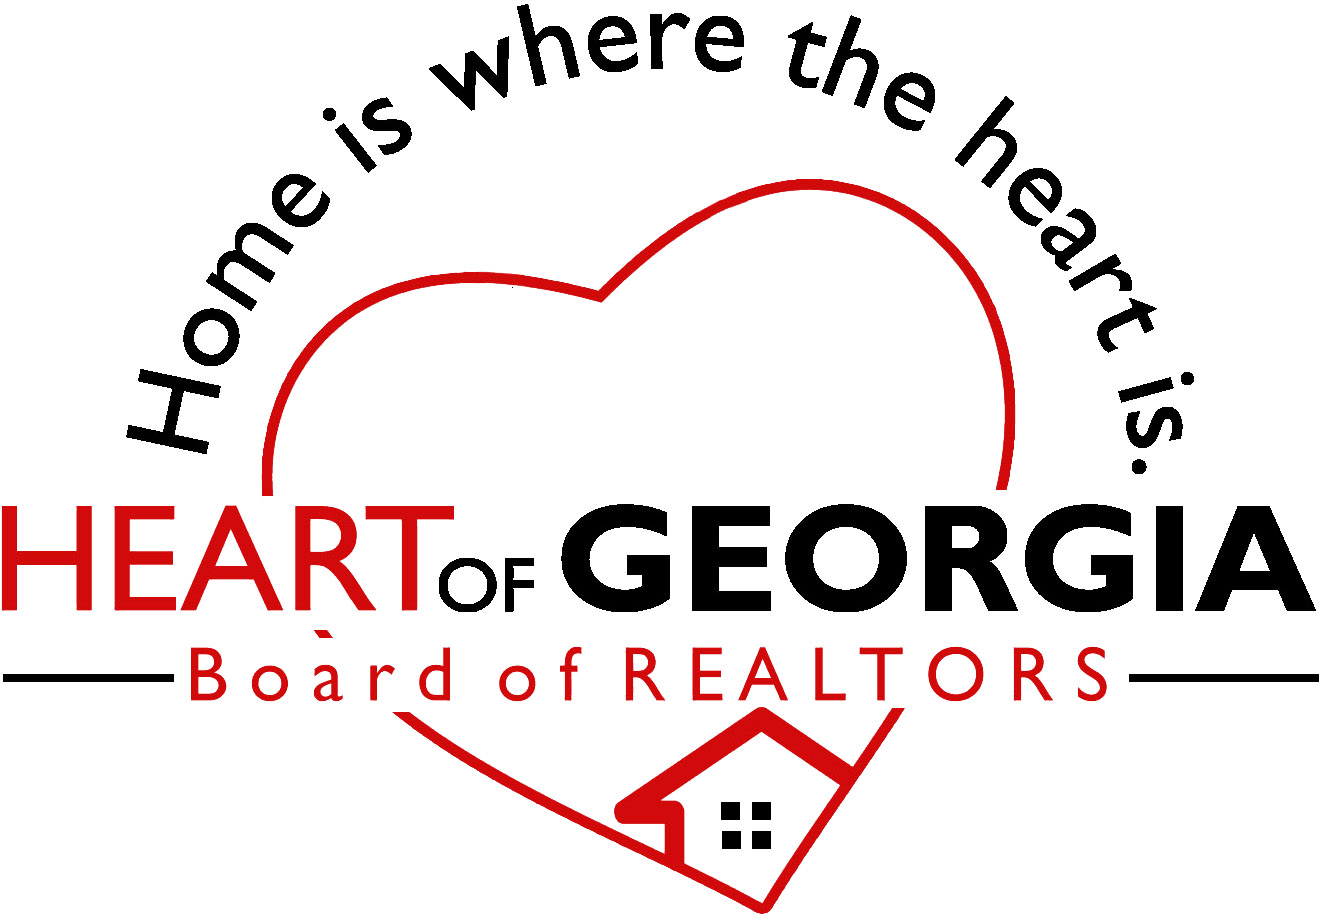 Heart of Georgia Board of REALTORS